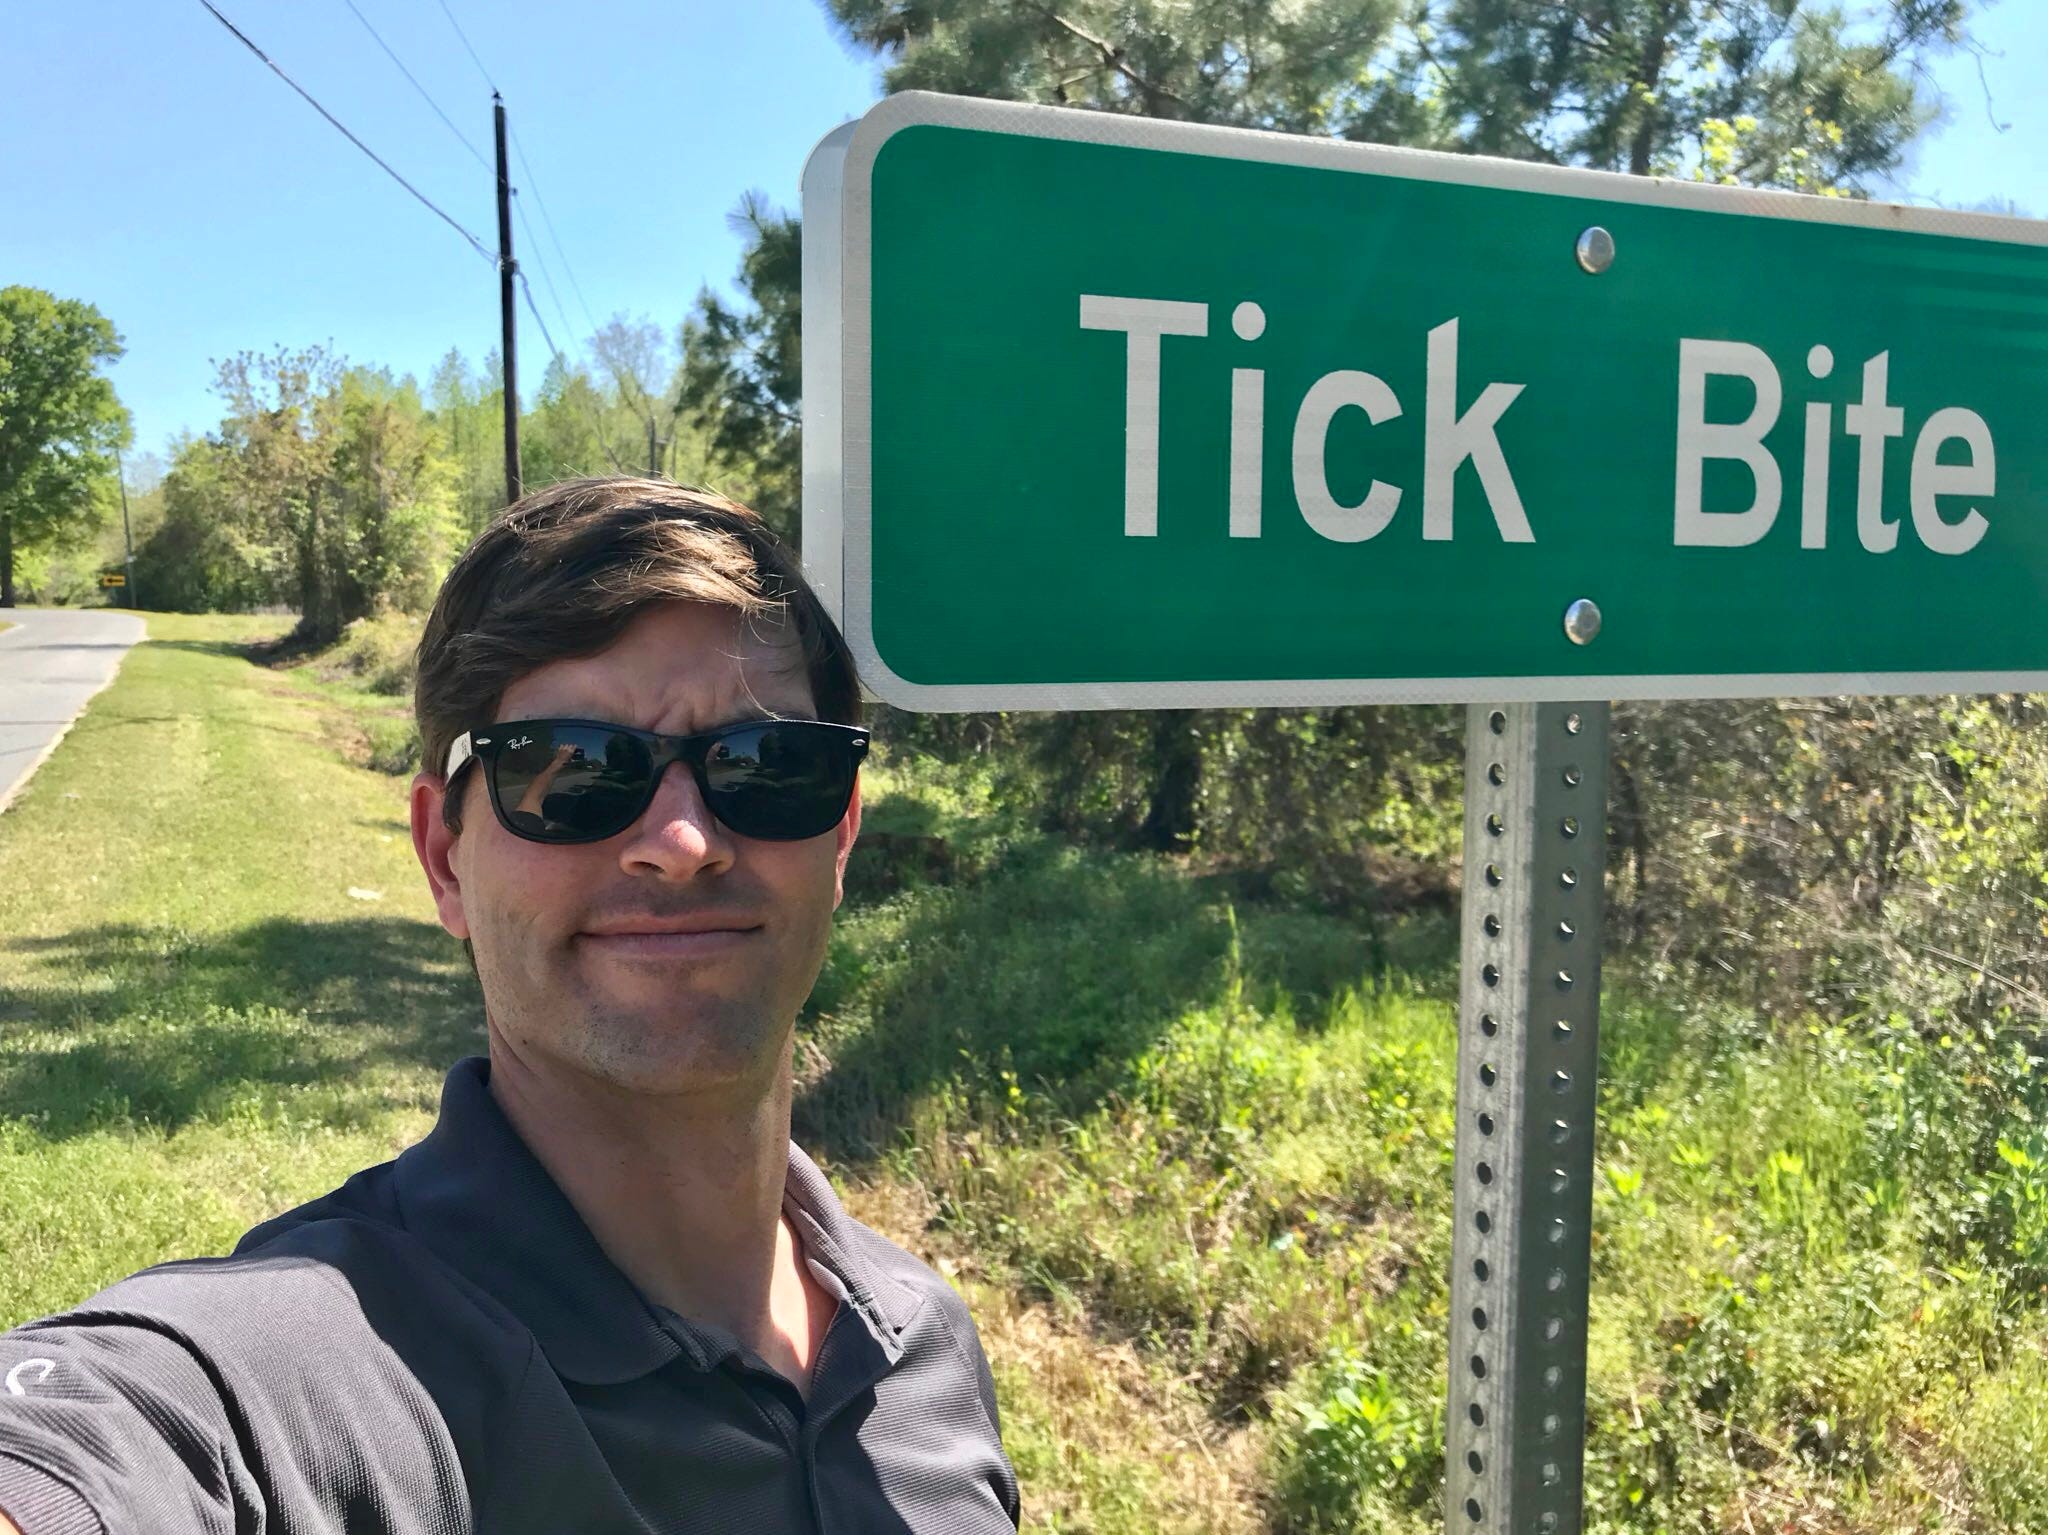 tick bite, nc sign